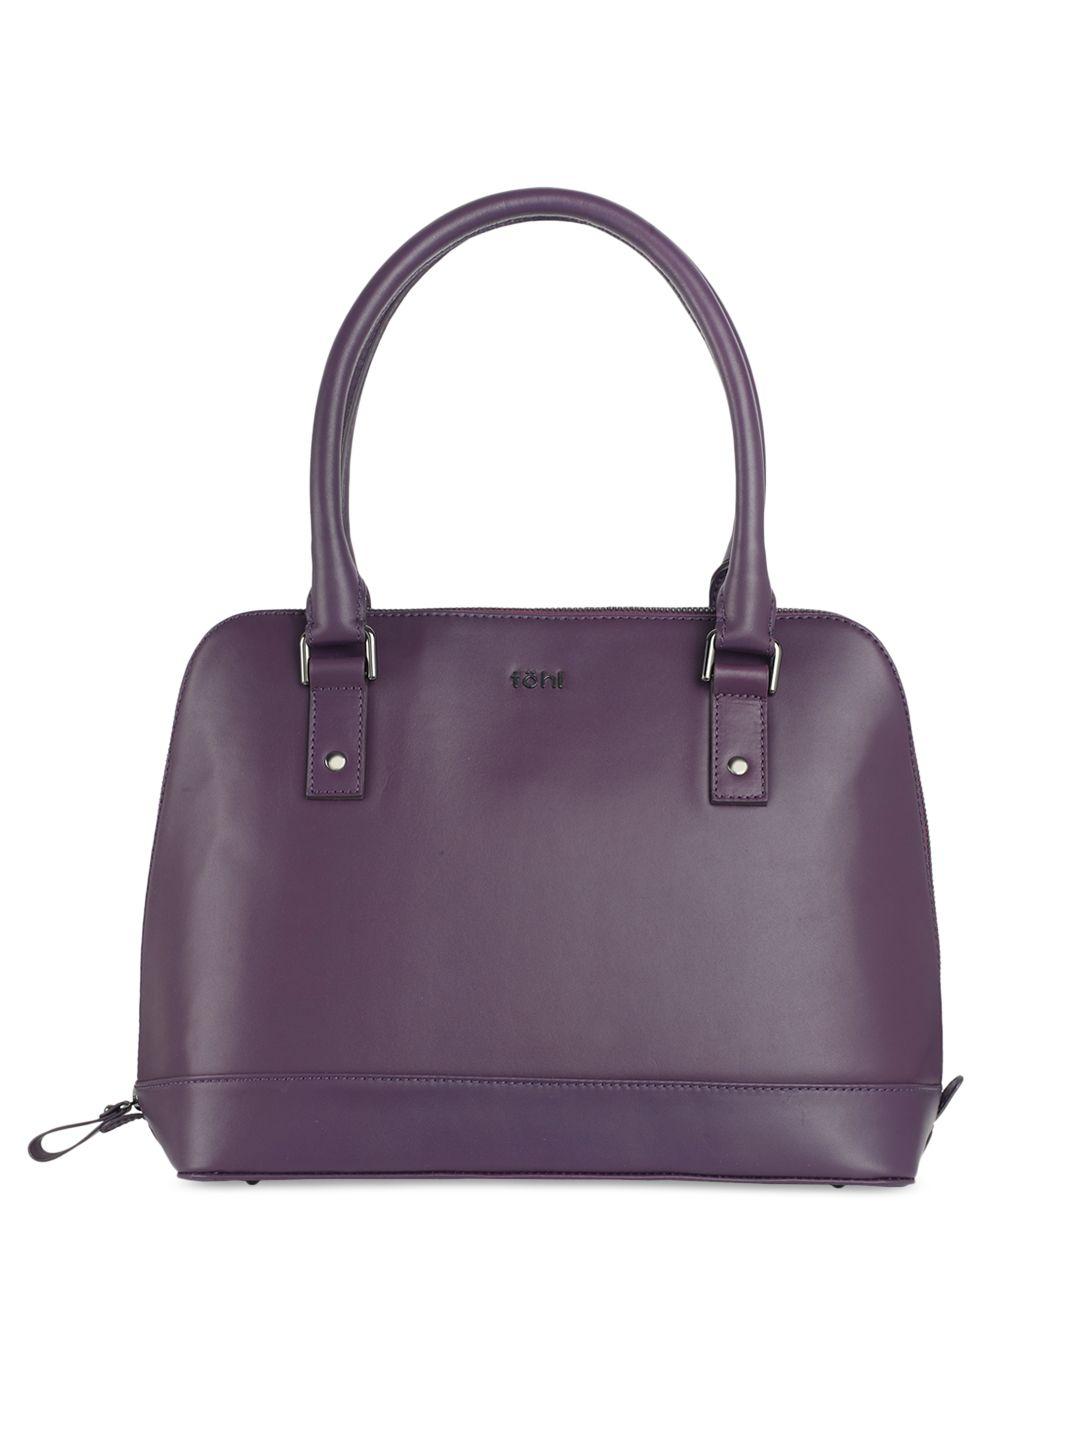 tohl purple solid leather shoulder bag